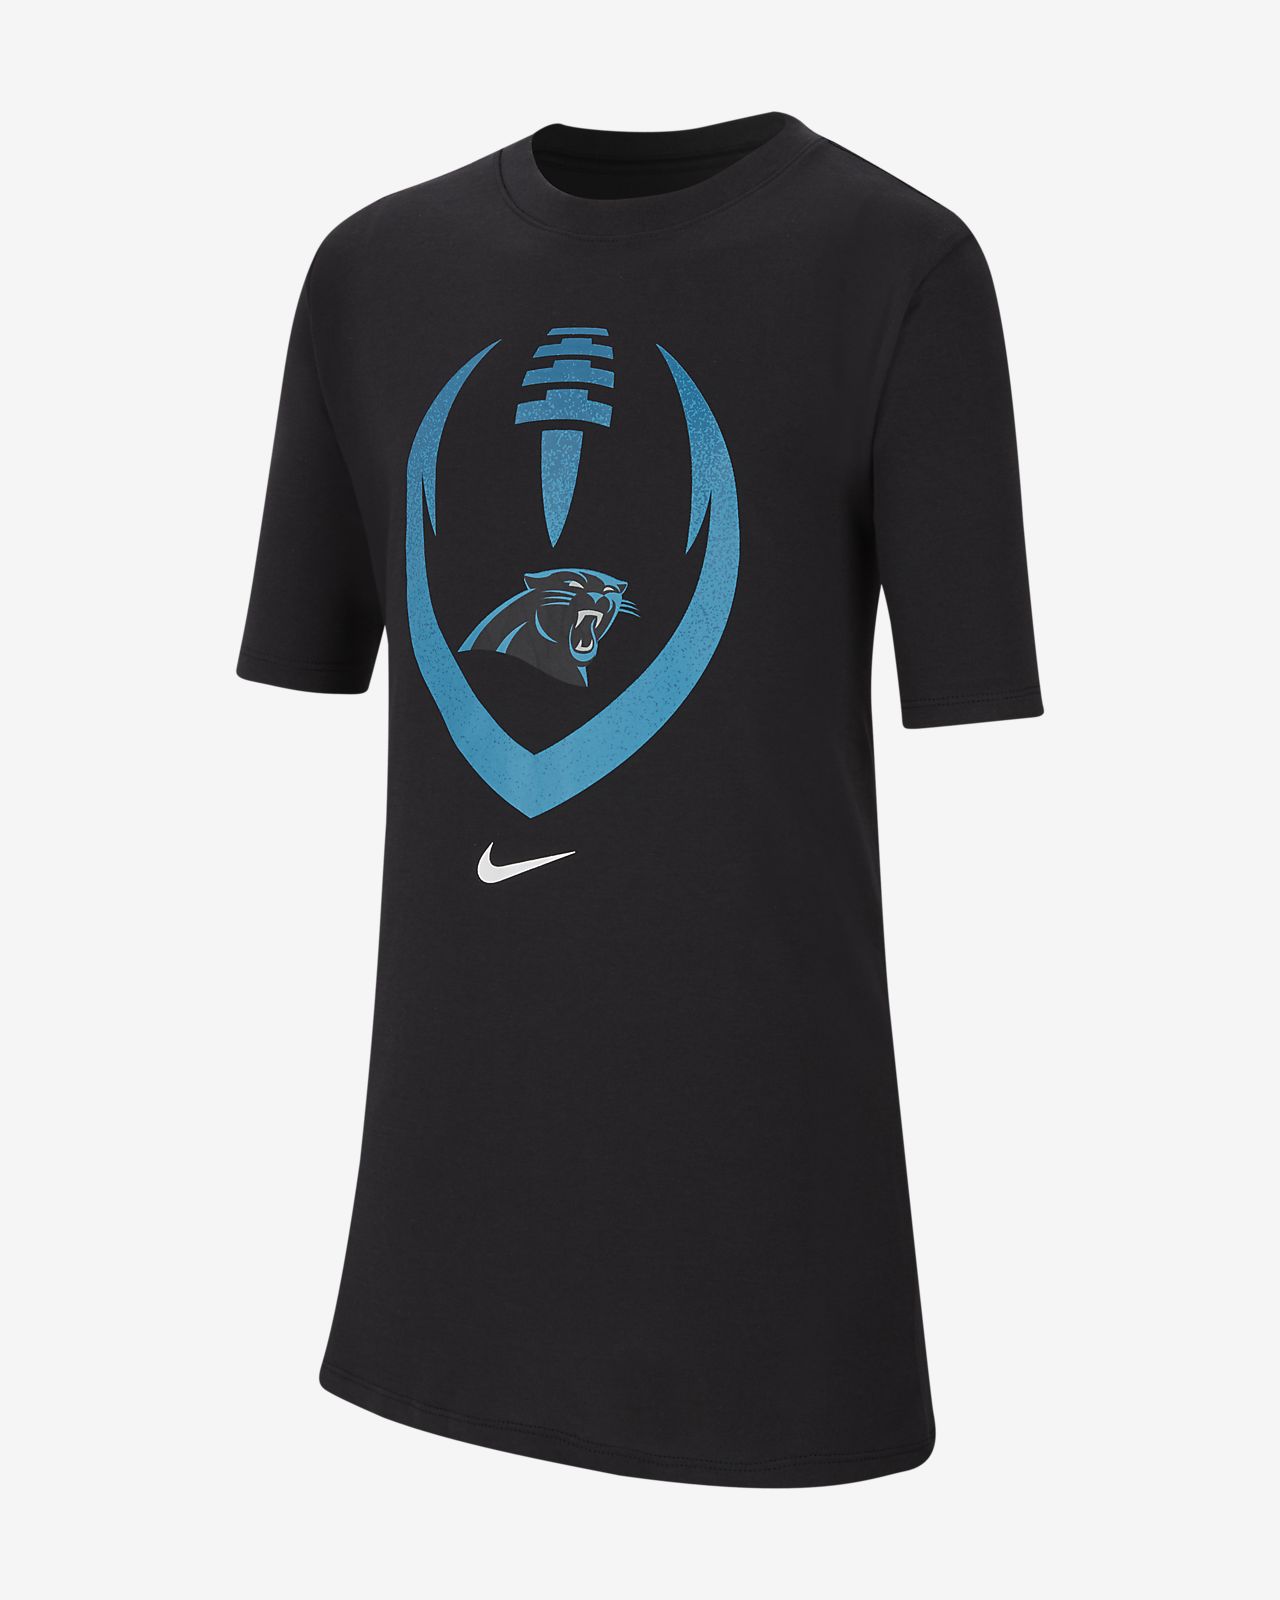 Nike (NFL Panthers) Big Kids' T-Shirt. Nike.com